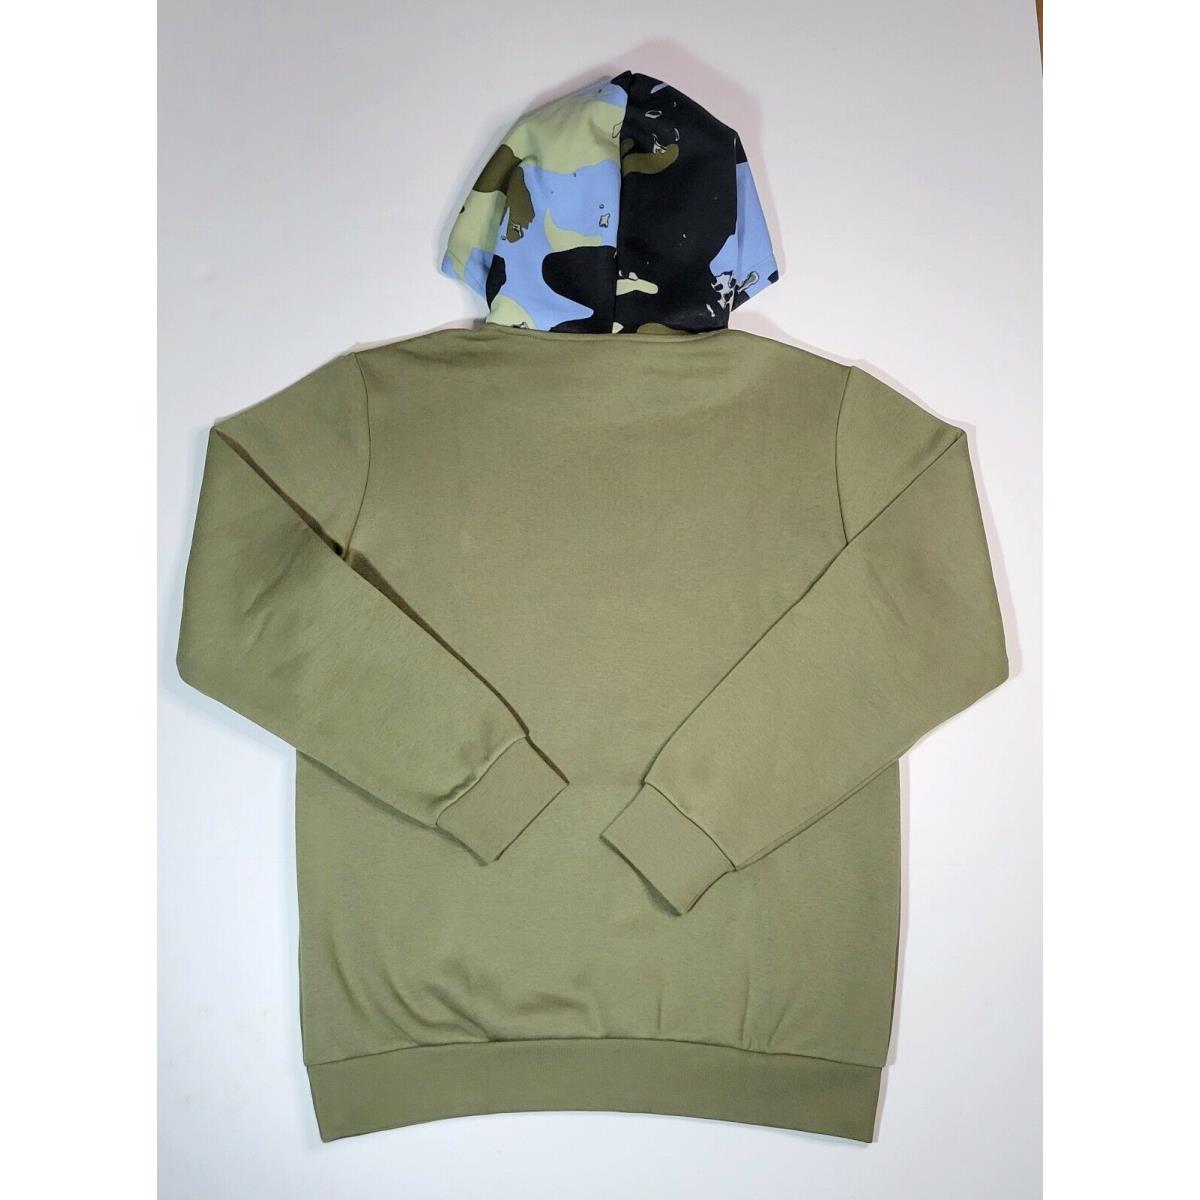 Adidas Originals Hoodie Men Camo Fleece Pullover Sweater Olive Green Blue Medium